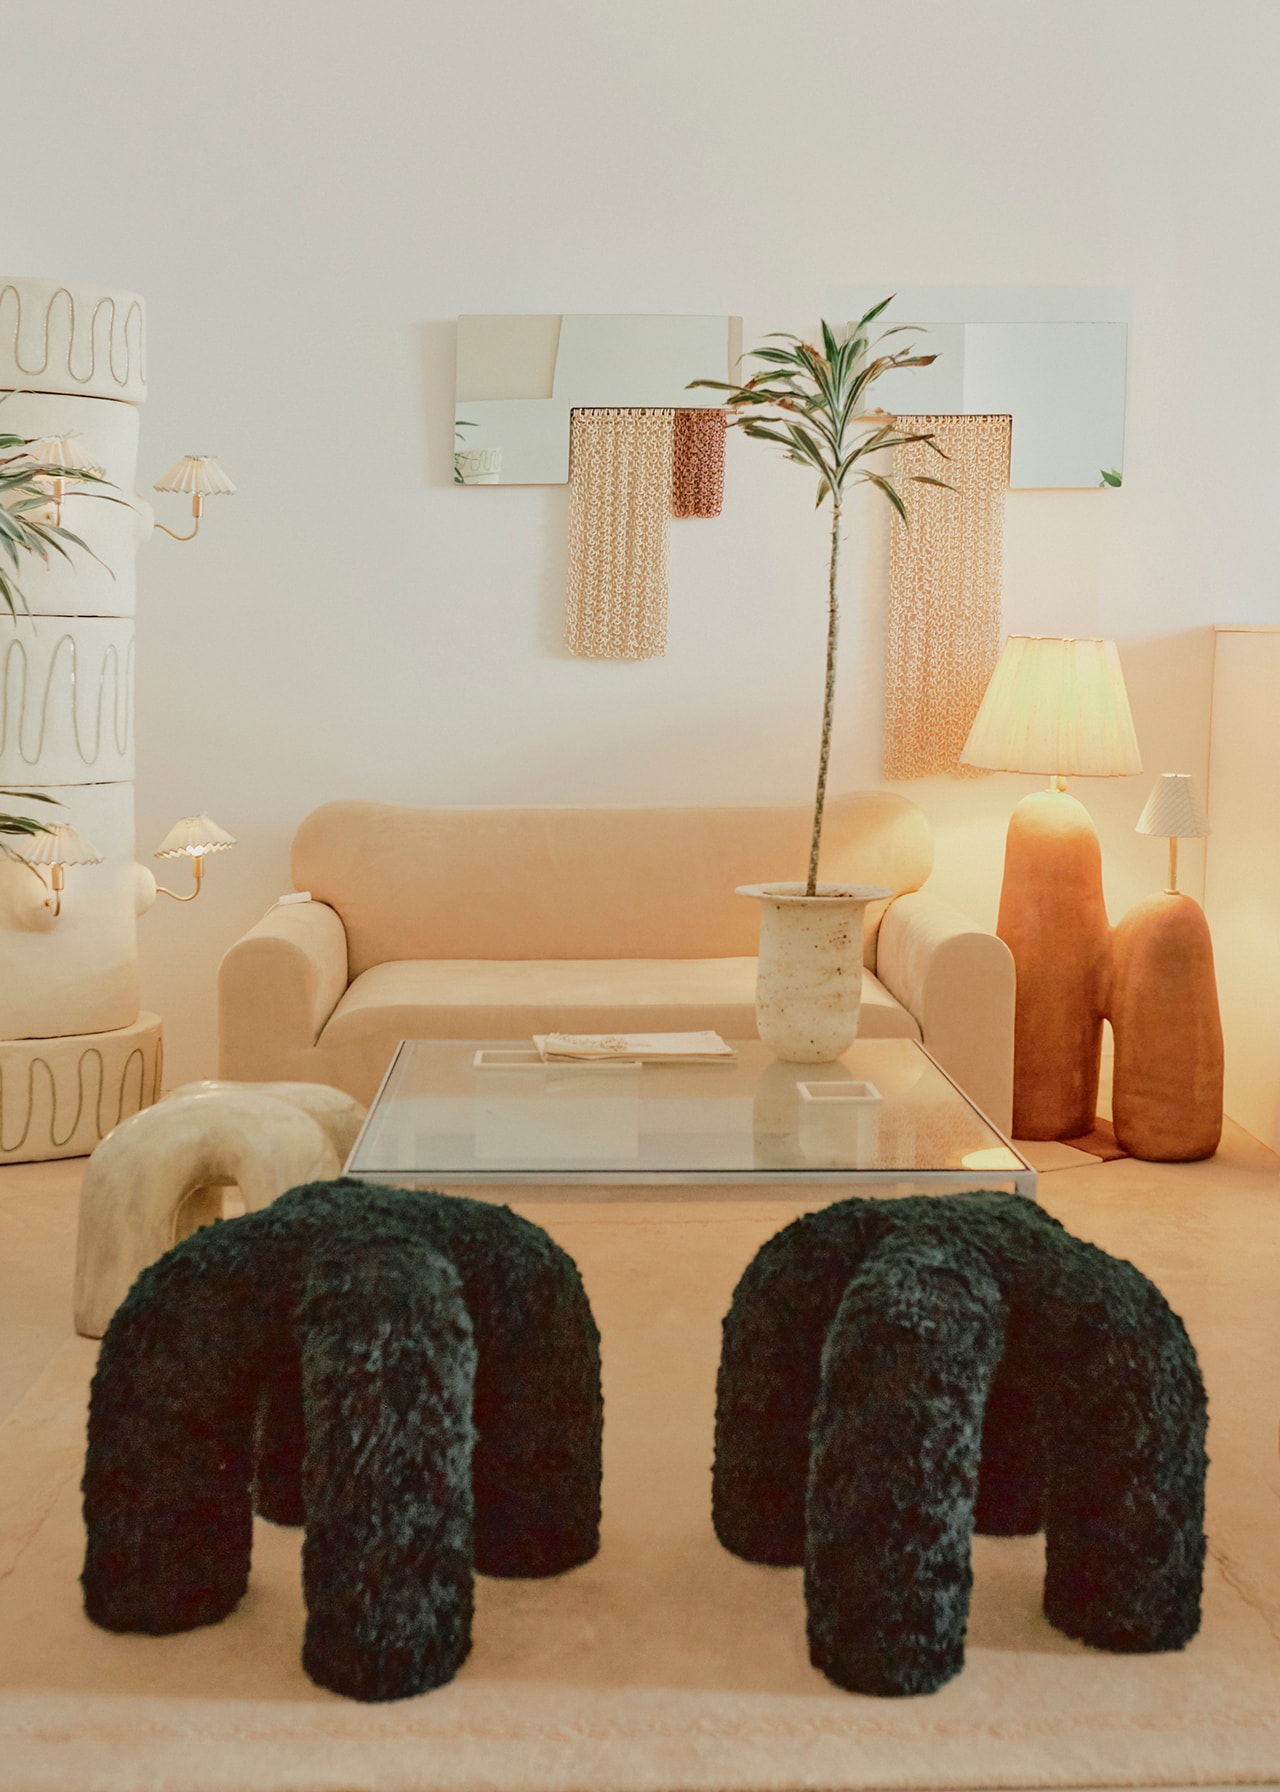 Eny Lee Parker Furniture Designer Ceramic Objects Lighting Oo Lamp New York Queens Interior Design Decor Studio Mirror Plants 